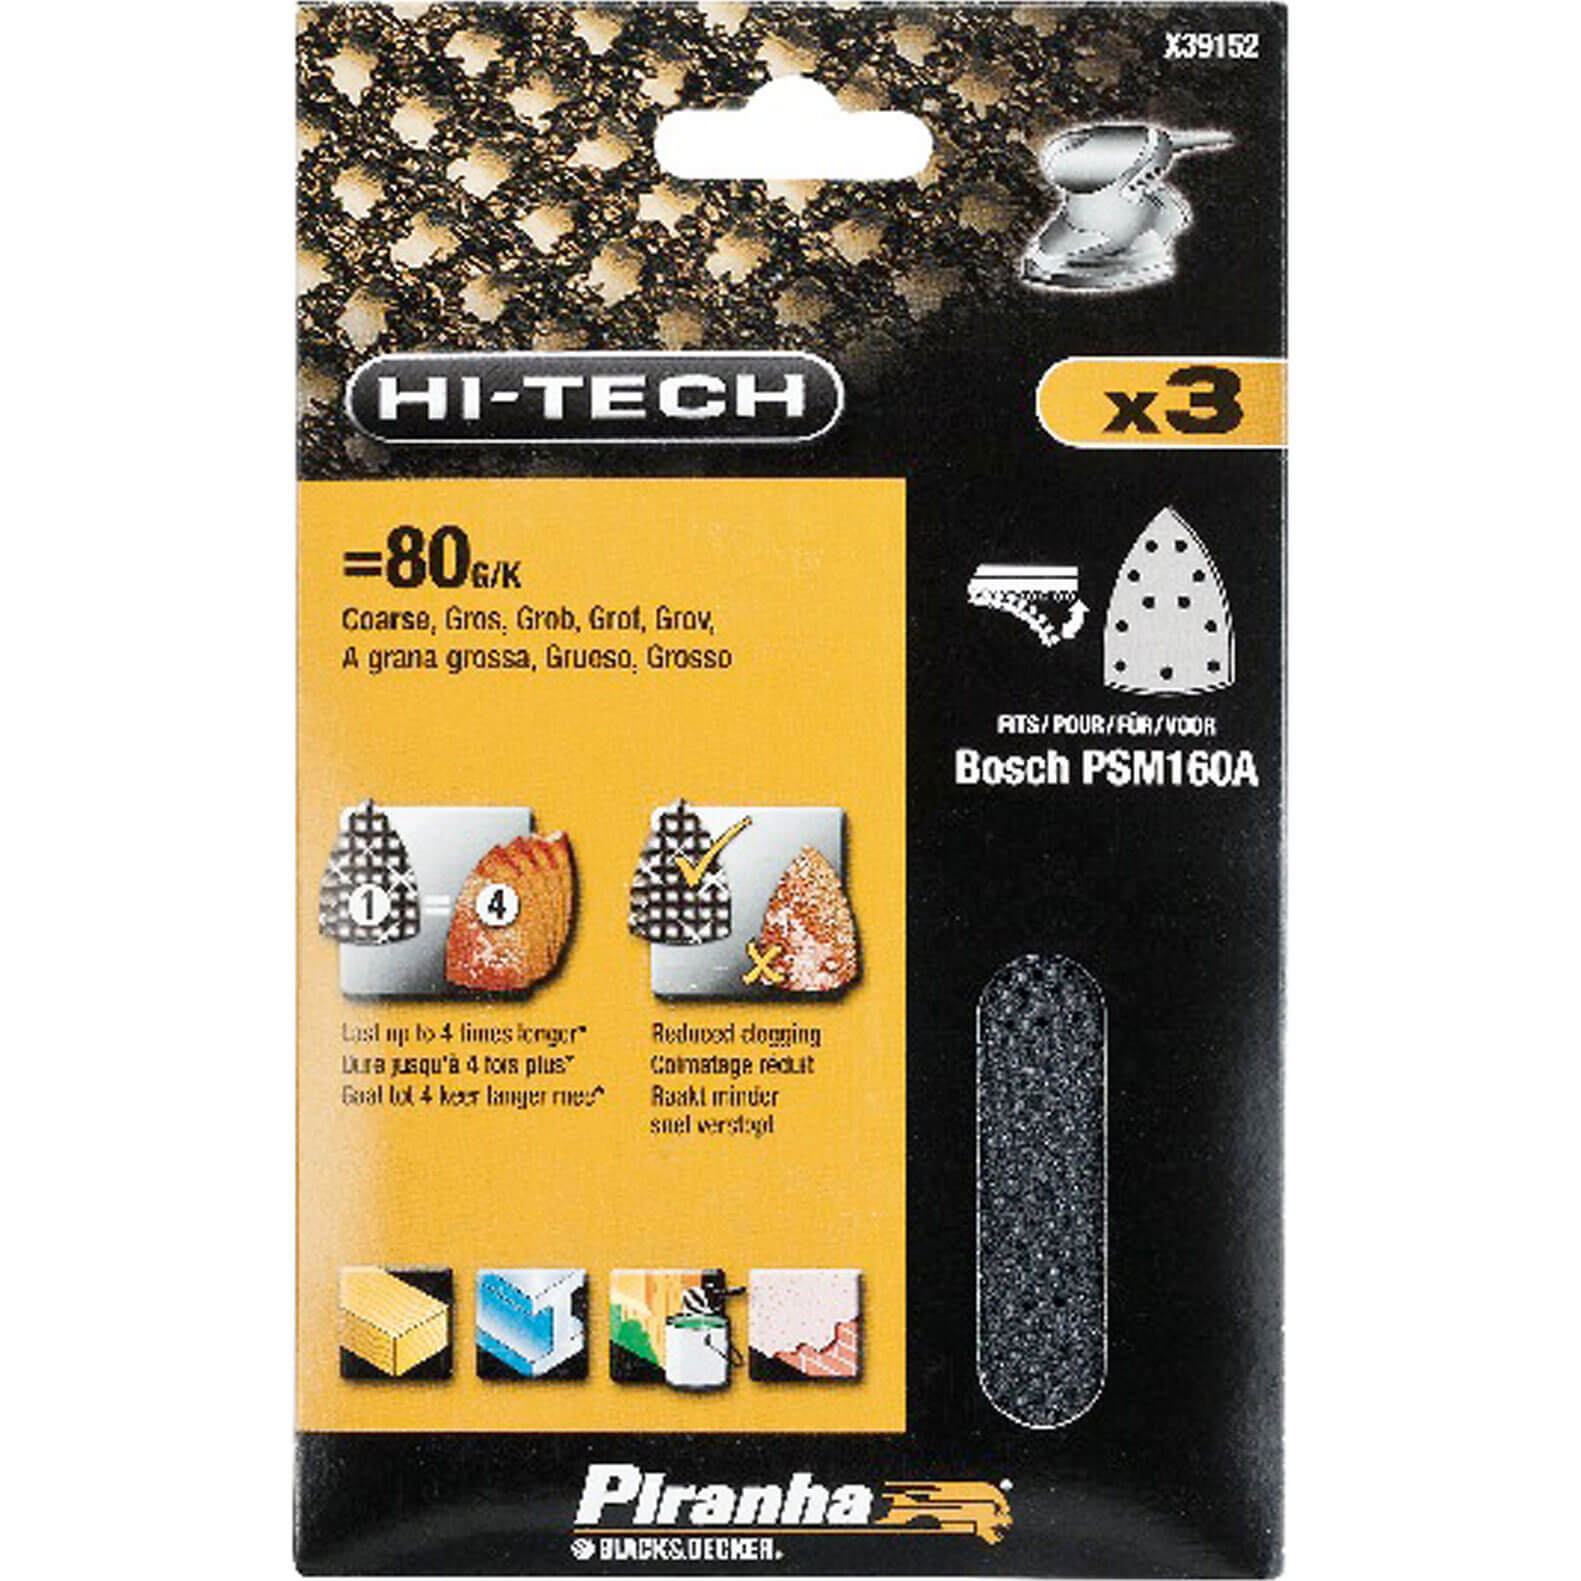 Black and Decker Piranha Hi Tech Quick Fit Multi Sander Delta Sanding Sheets 120g Pack of 3